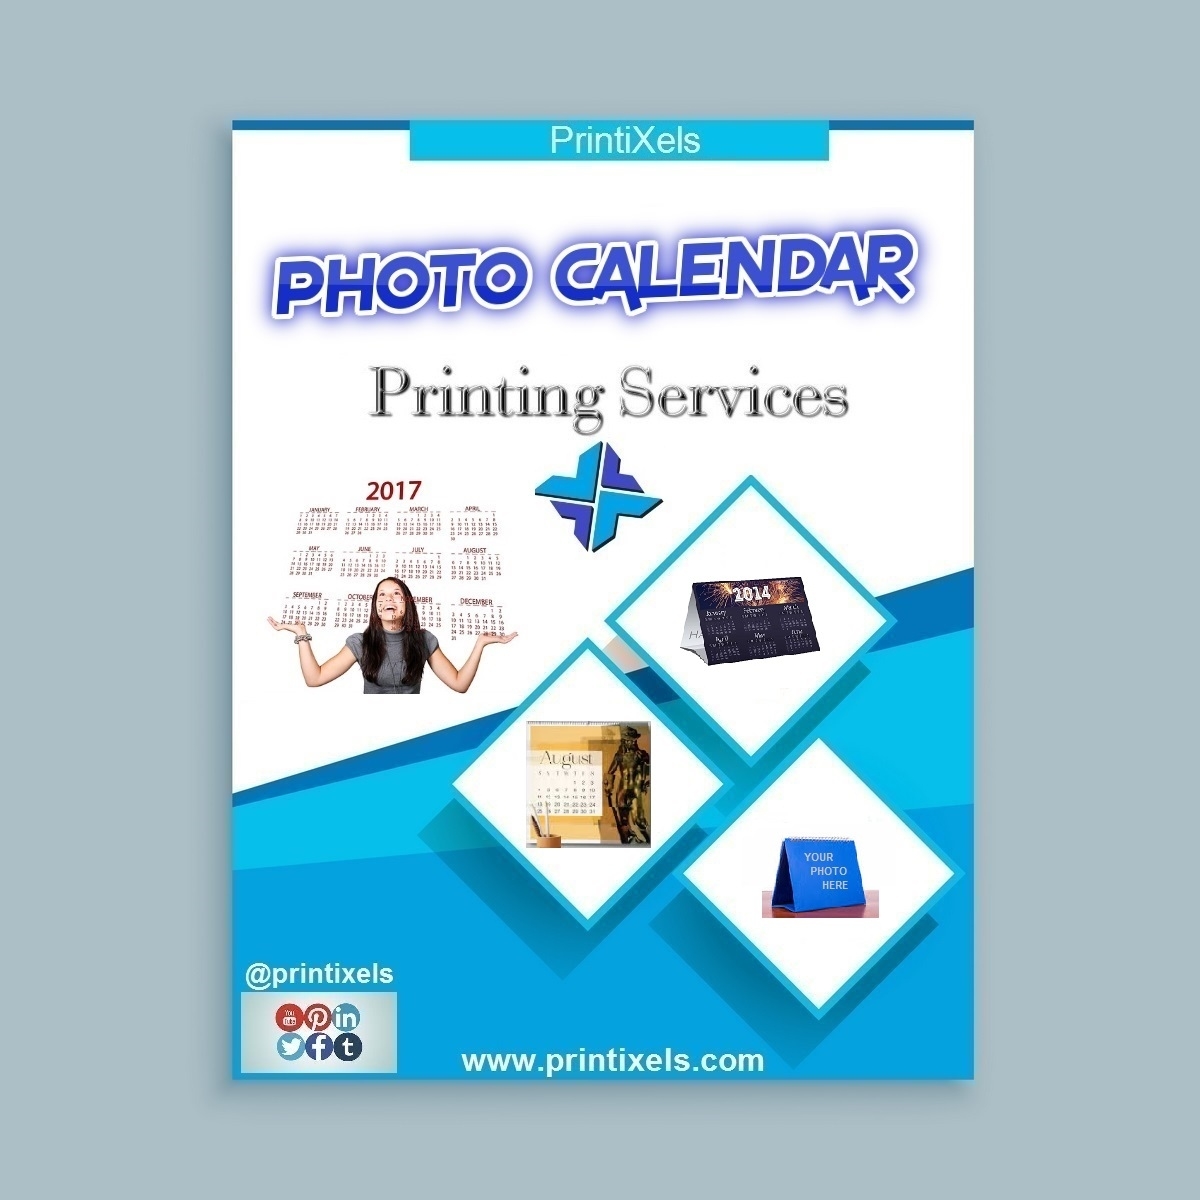 Photo Calendar Printing Services | Printixels™ Philippines Calendar Printing Services Philippines